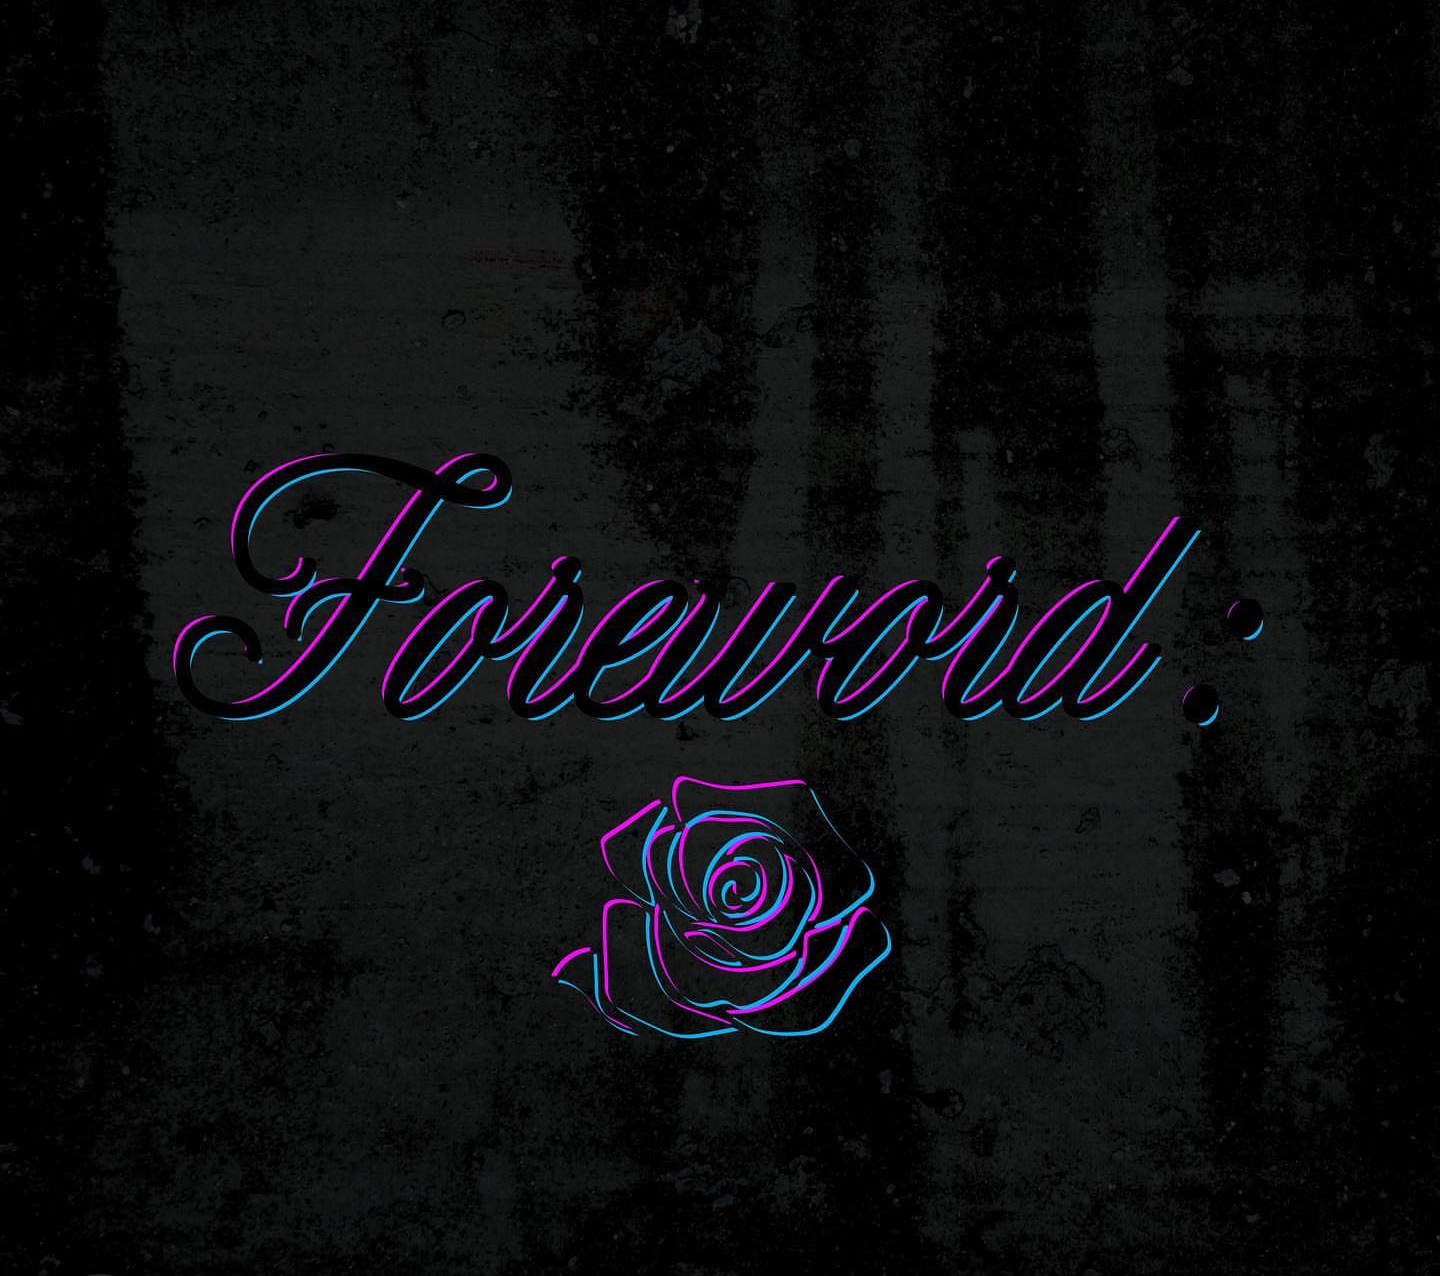 Shawn Stockman Of Boyz II Men Sets Release Date for Solo Album "Forward"